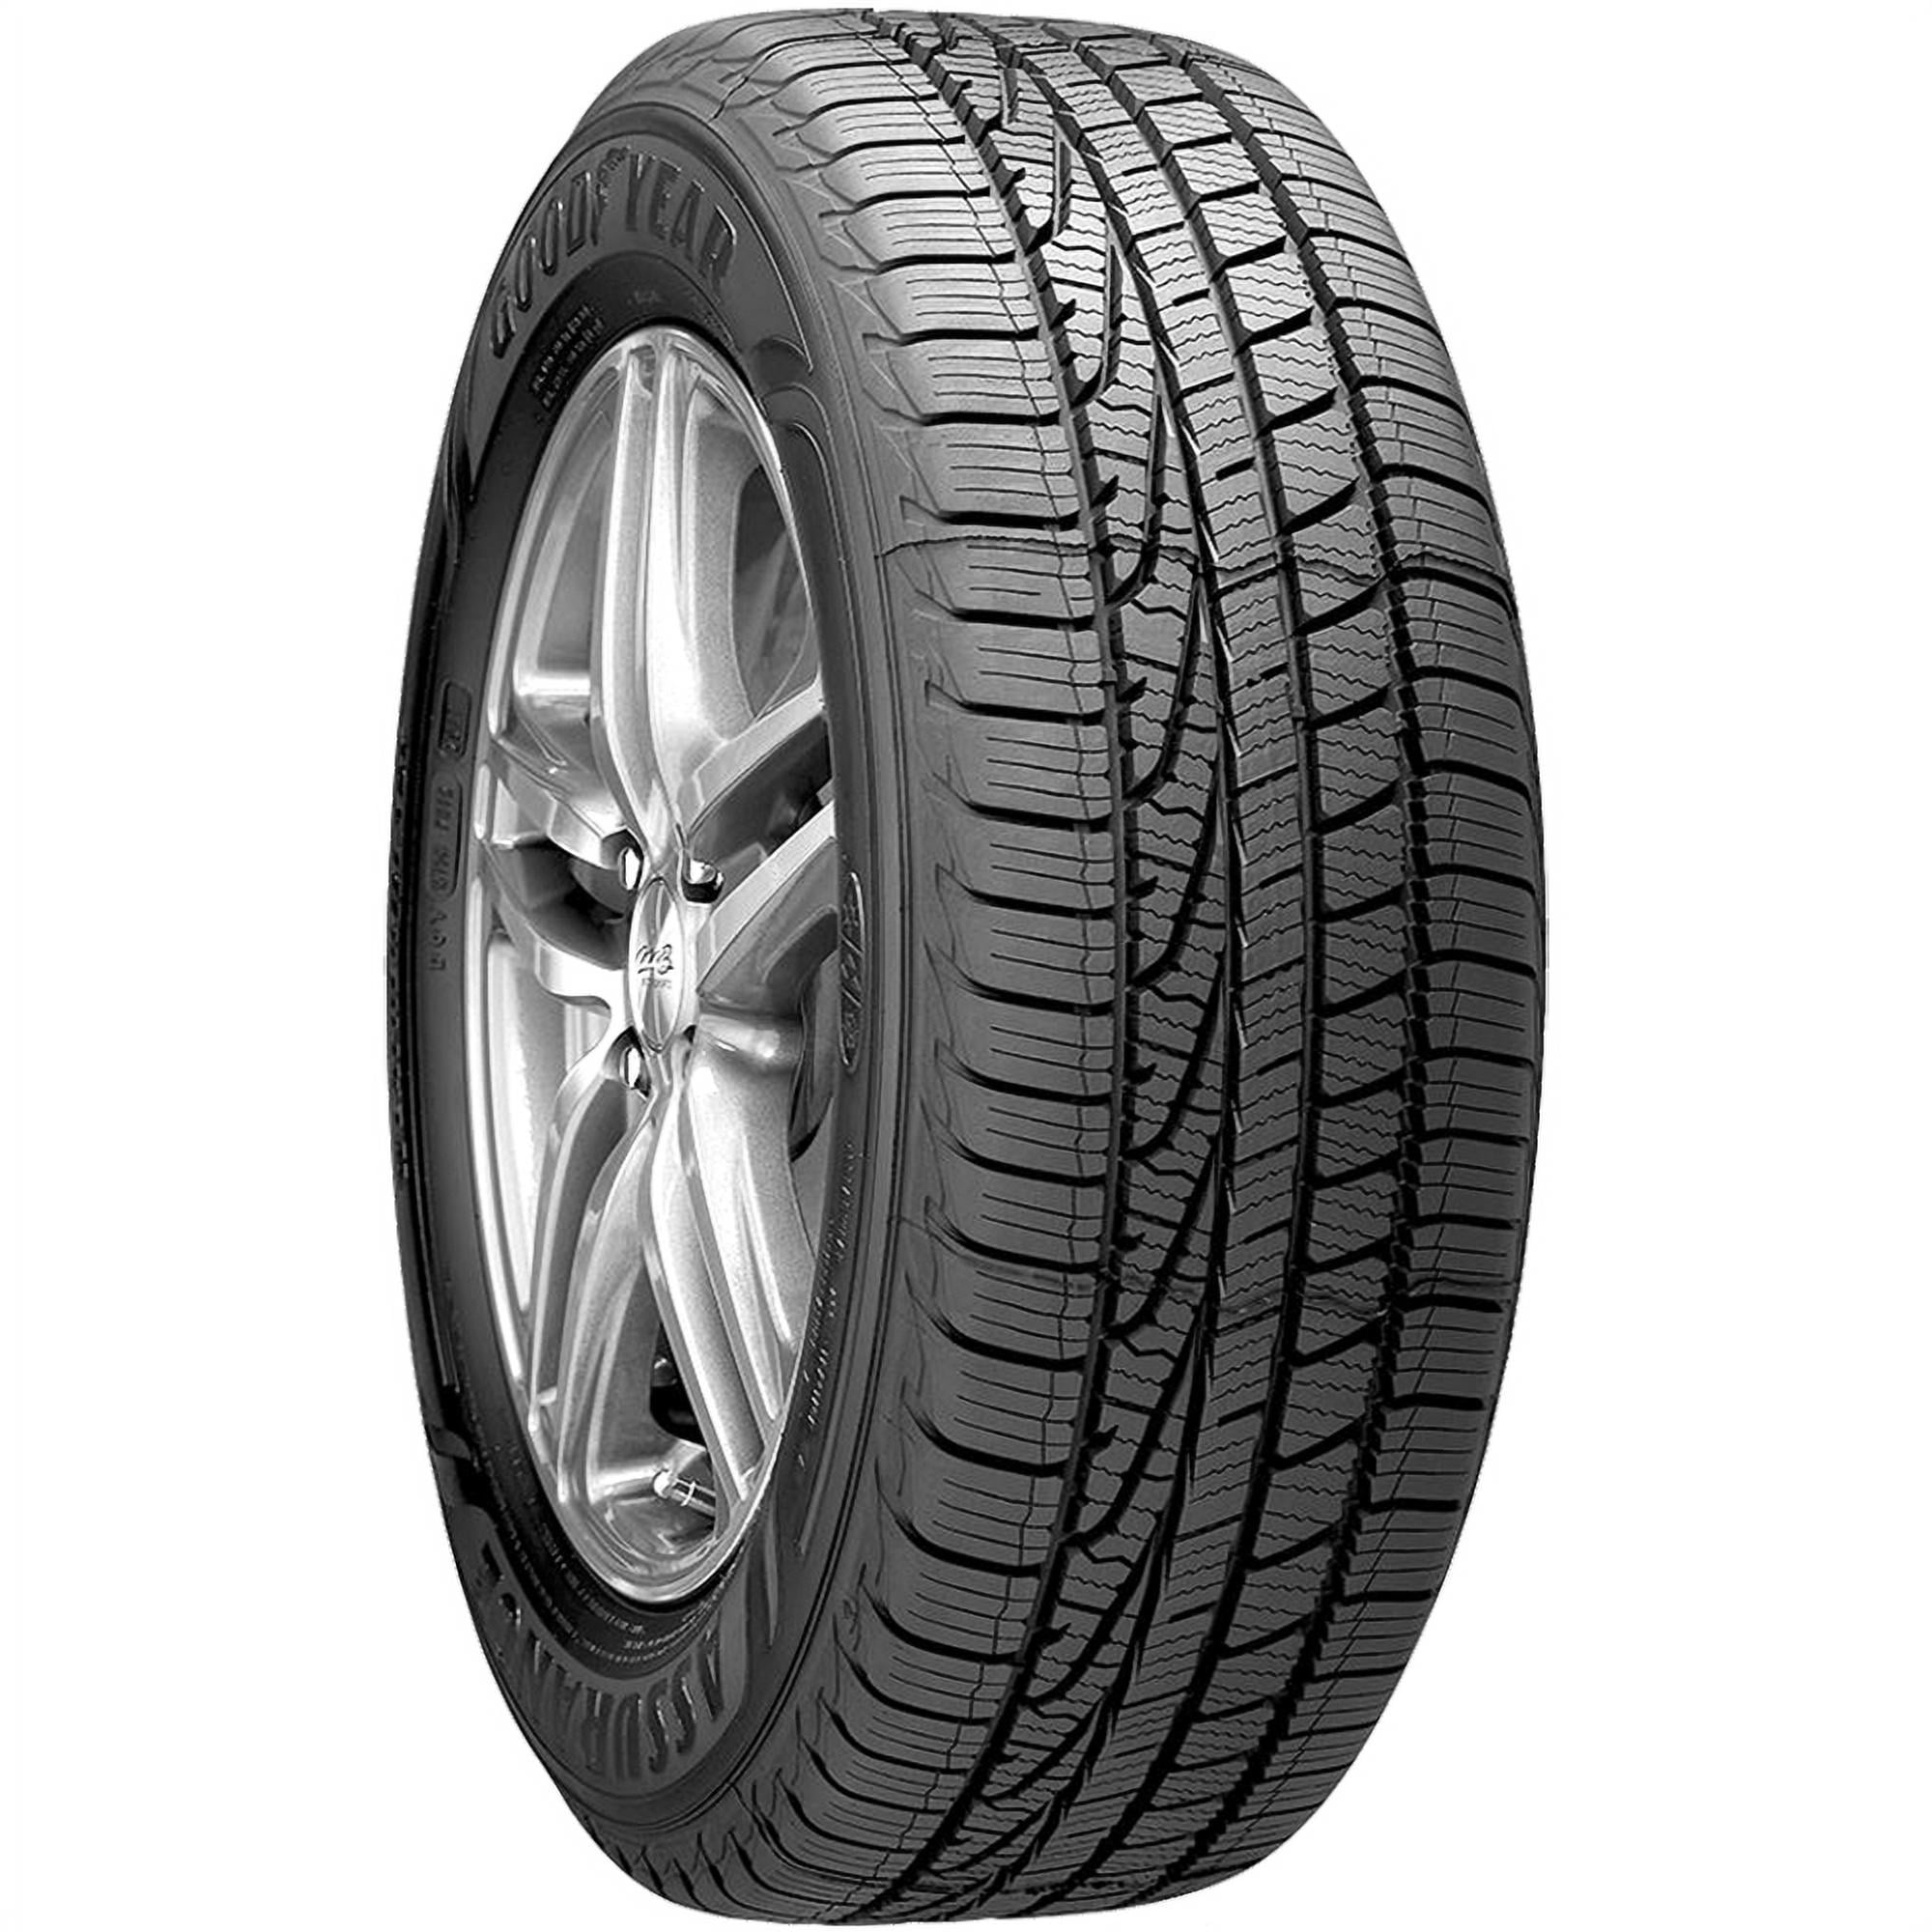 Goodyear Assurance Weatherready 225/55R18 98V All-Season Tire